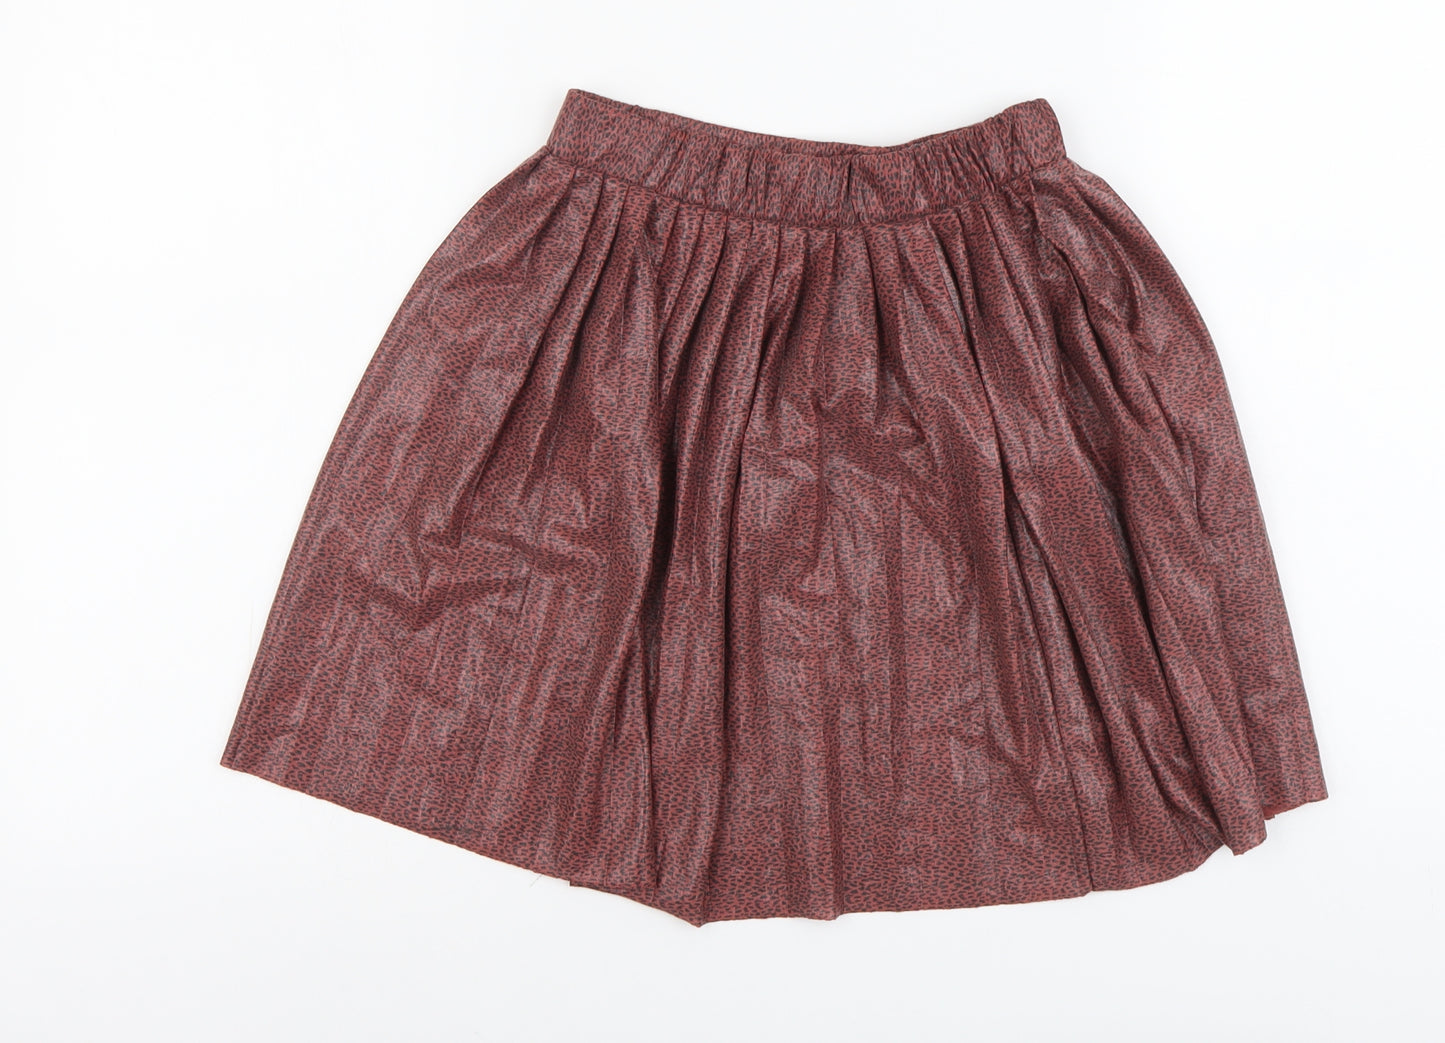 Zara Girls Pink Animal Print Polyester Pleated Skirt Size 11-12 Years Regular Pull On - Leopard Pattern